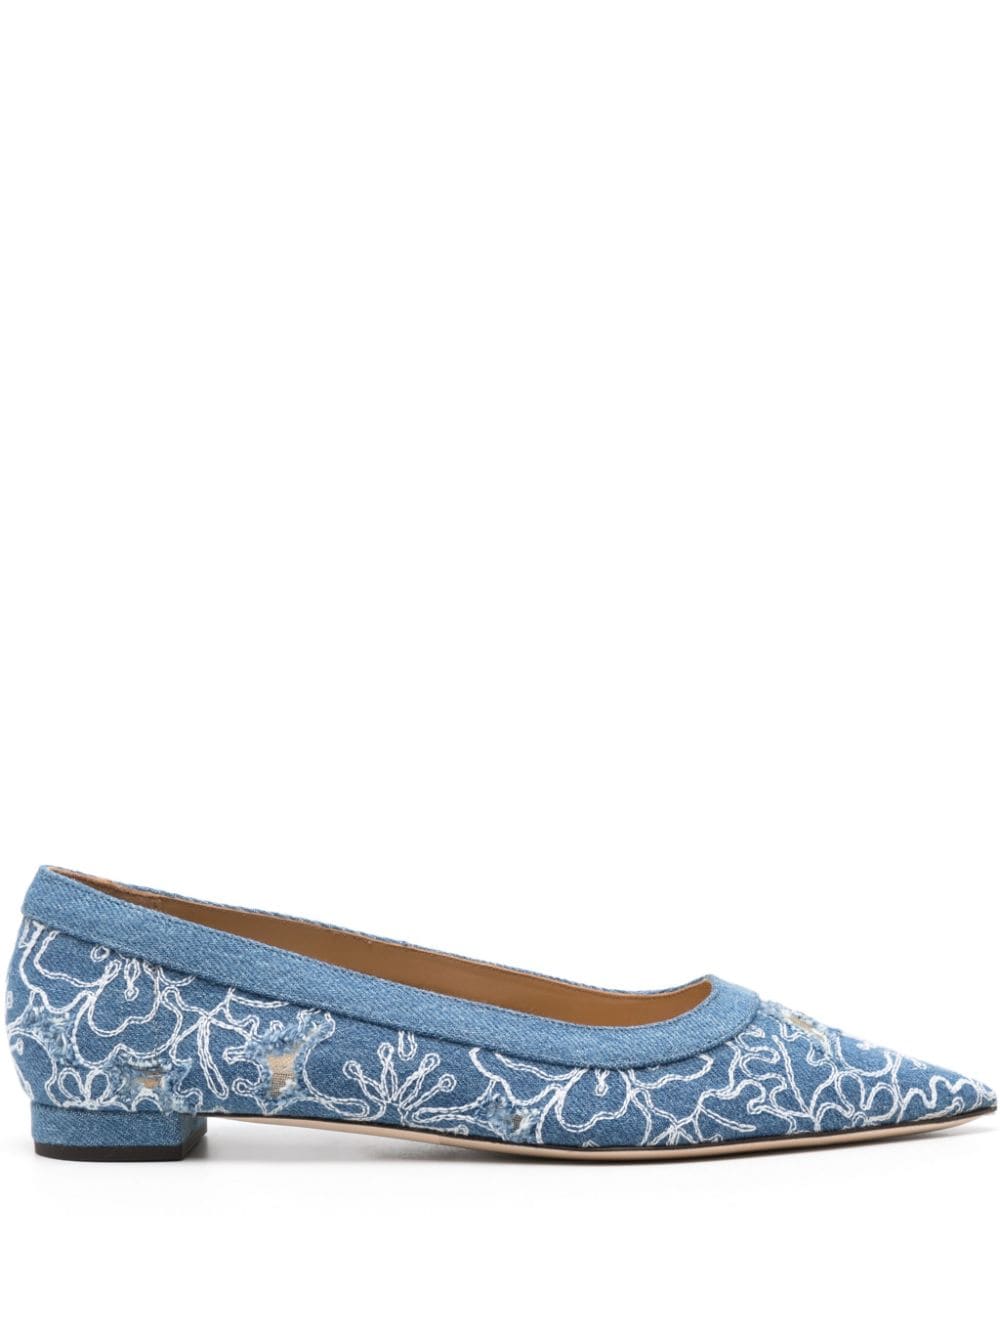 Arteana floral-embroidered ballerina shoes - Blue von Arteana